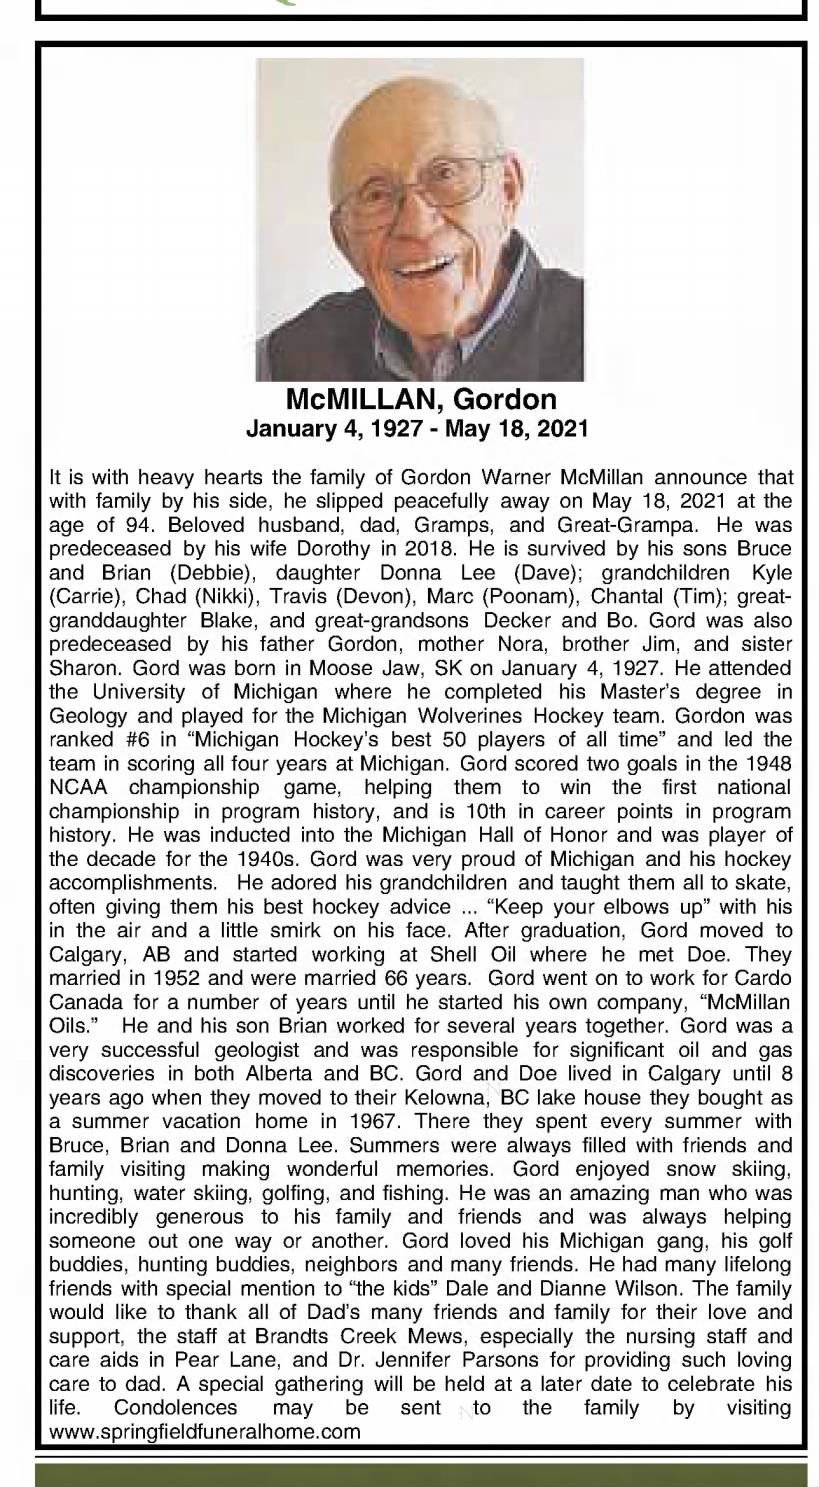 Obituary for Gordon Warner McMILLAN